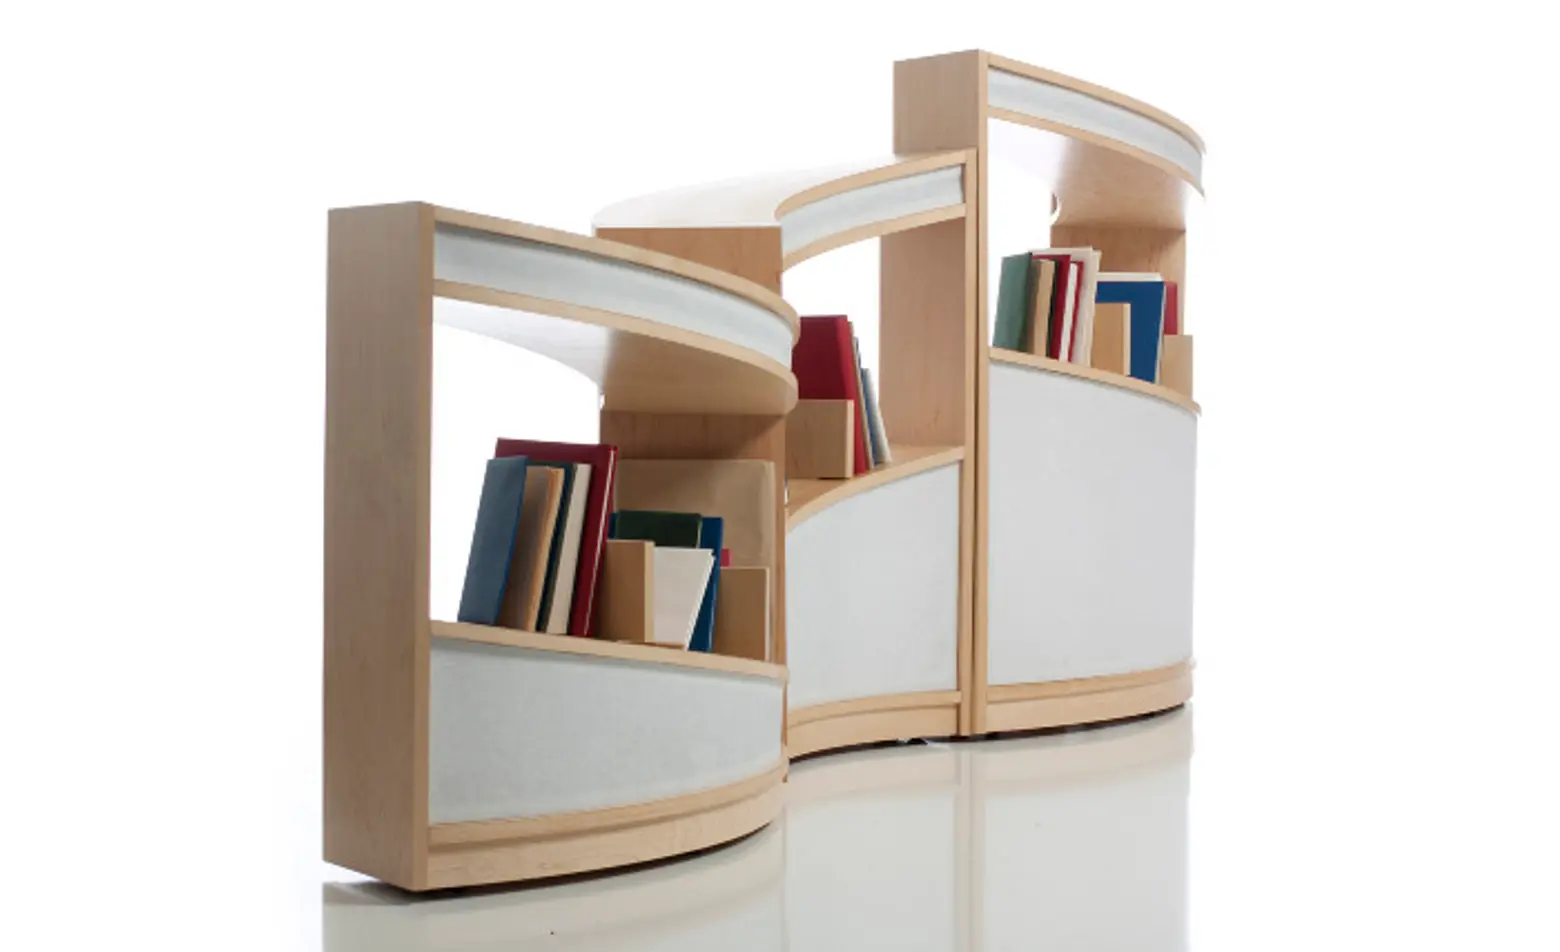 Nautilus bookshelf designed by Alicia Bastian